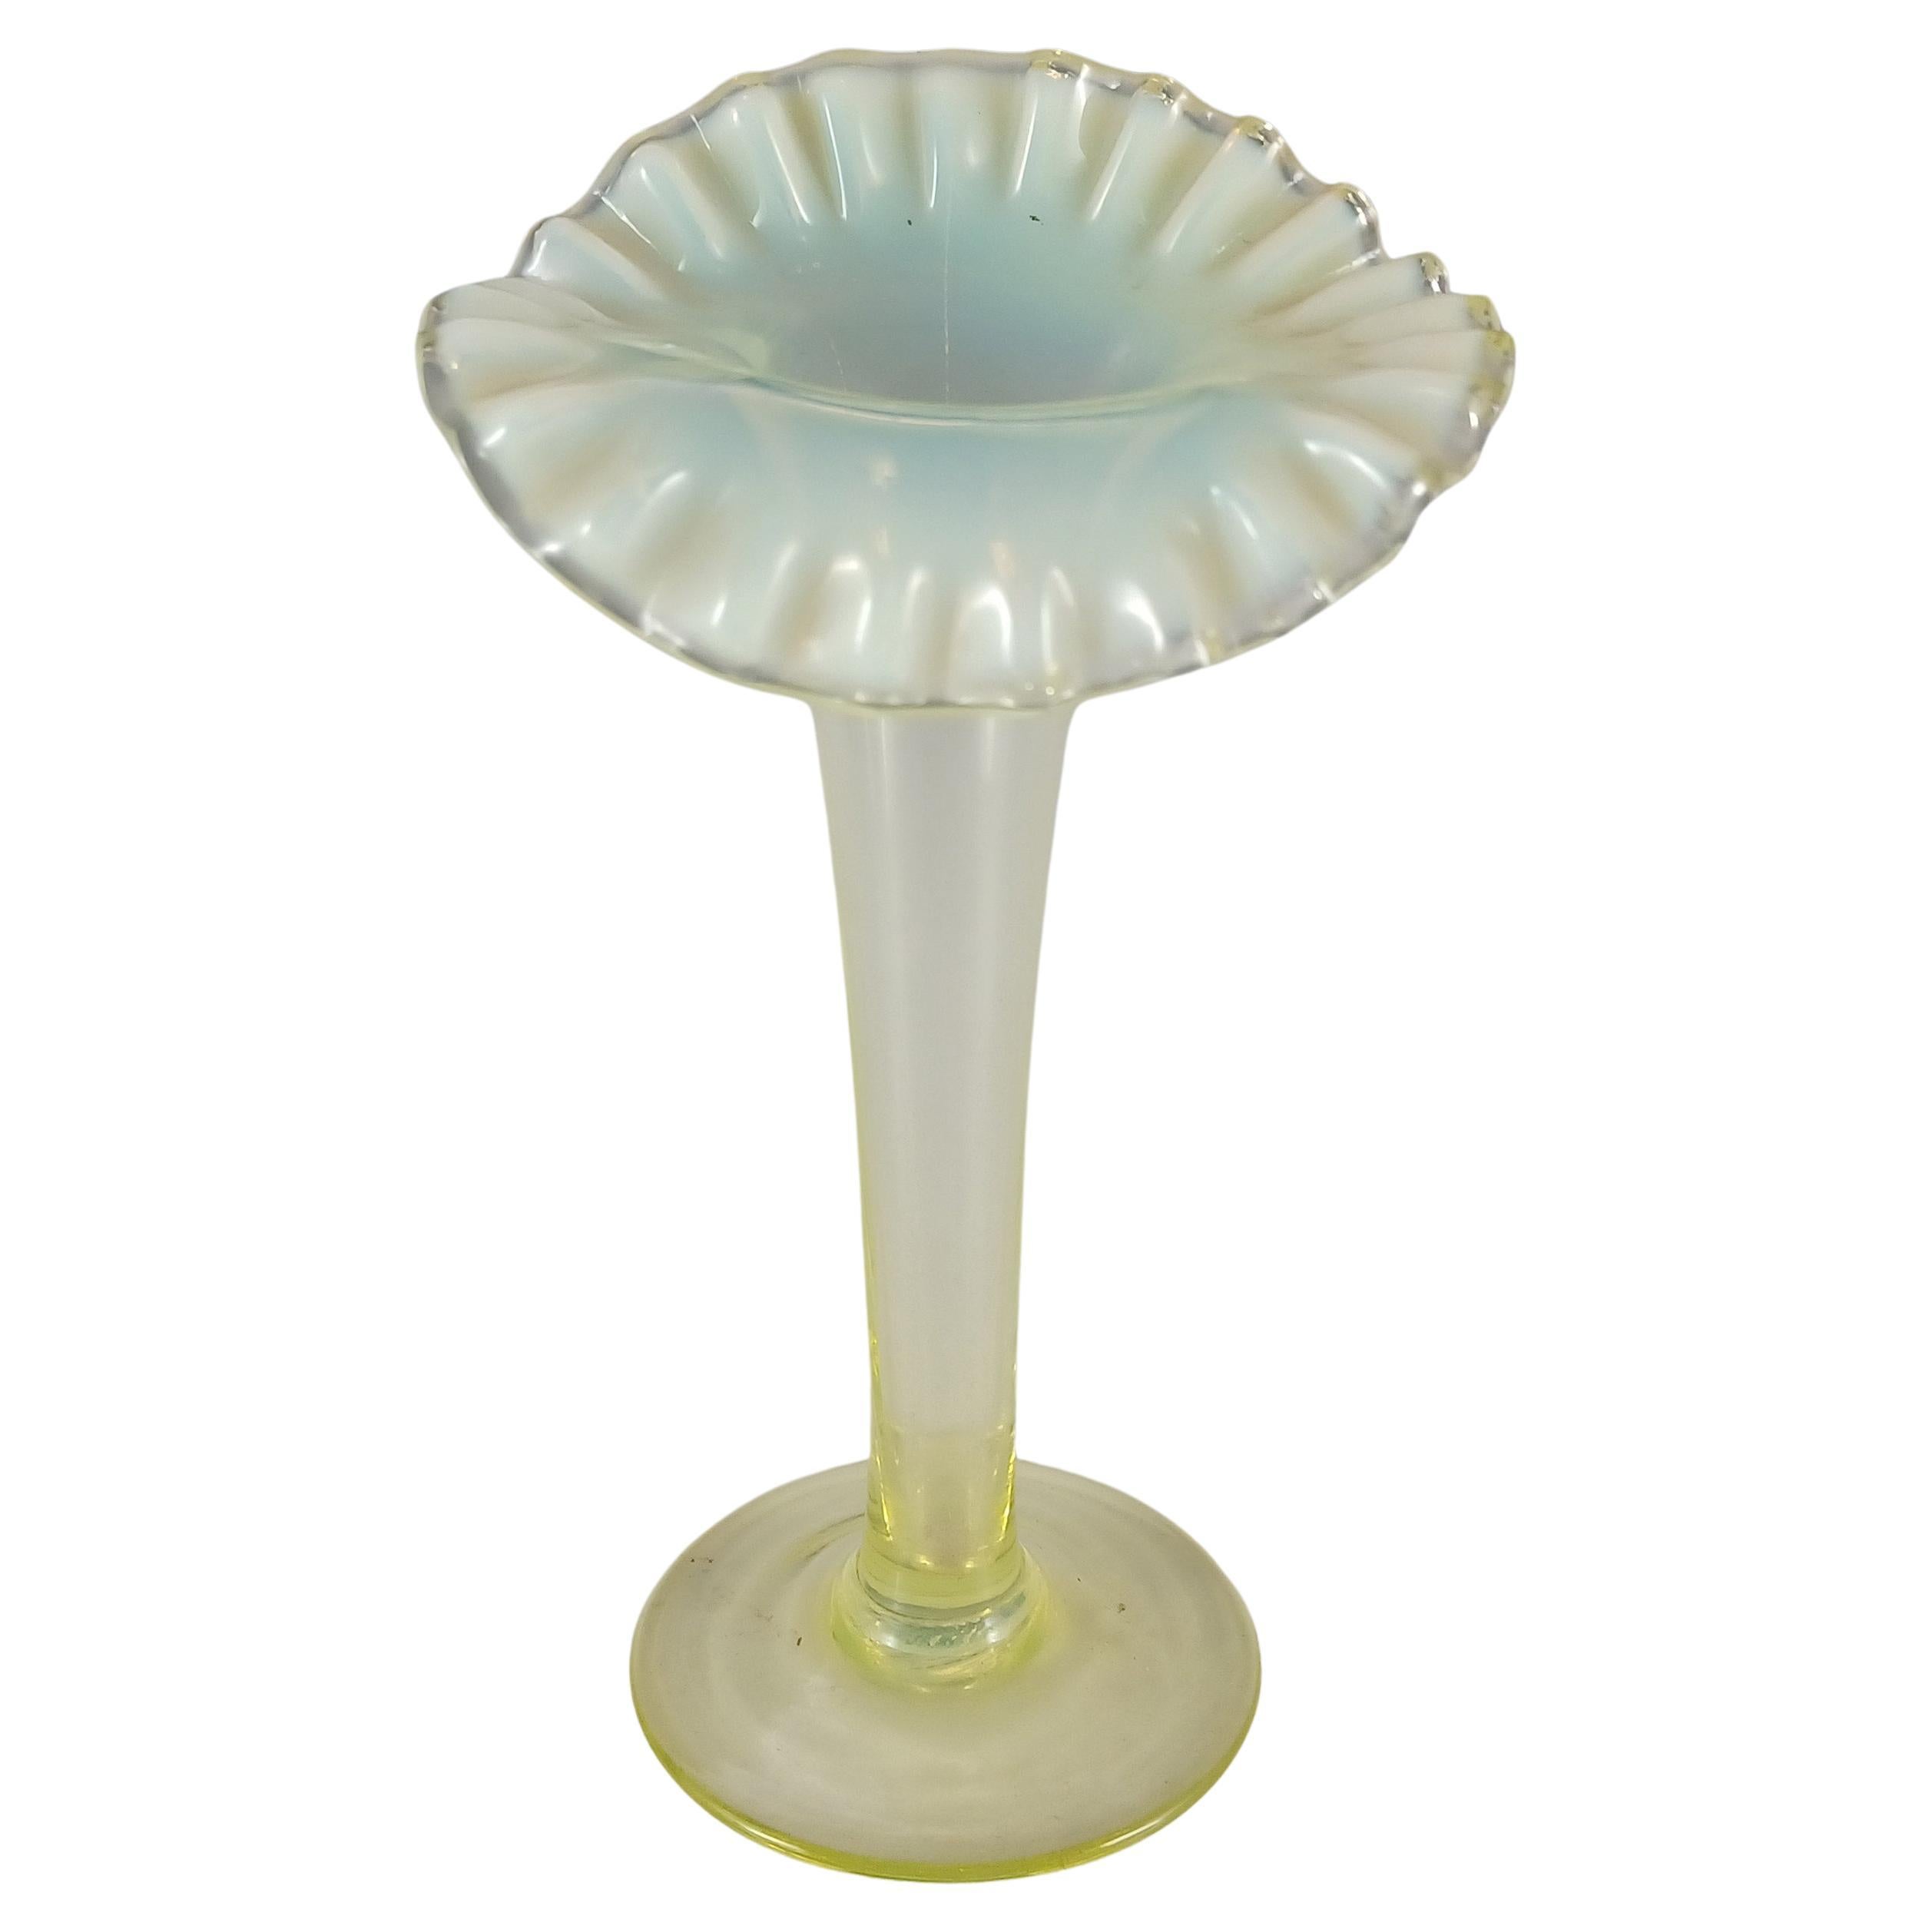 Burtles, Tate & Co Victorian 1890's Vaseline/Uranium Glass Pulpit Vase For Sale